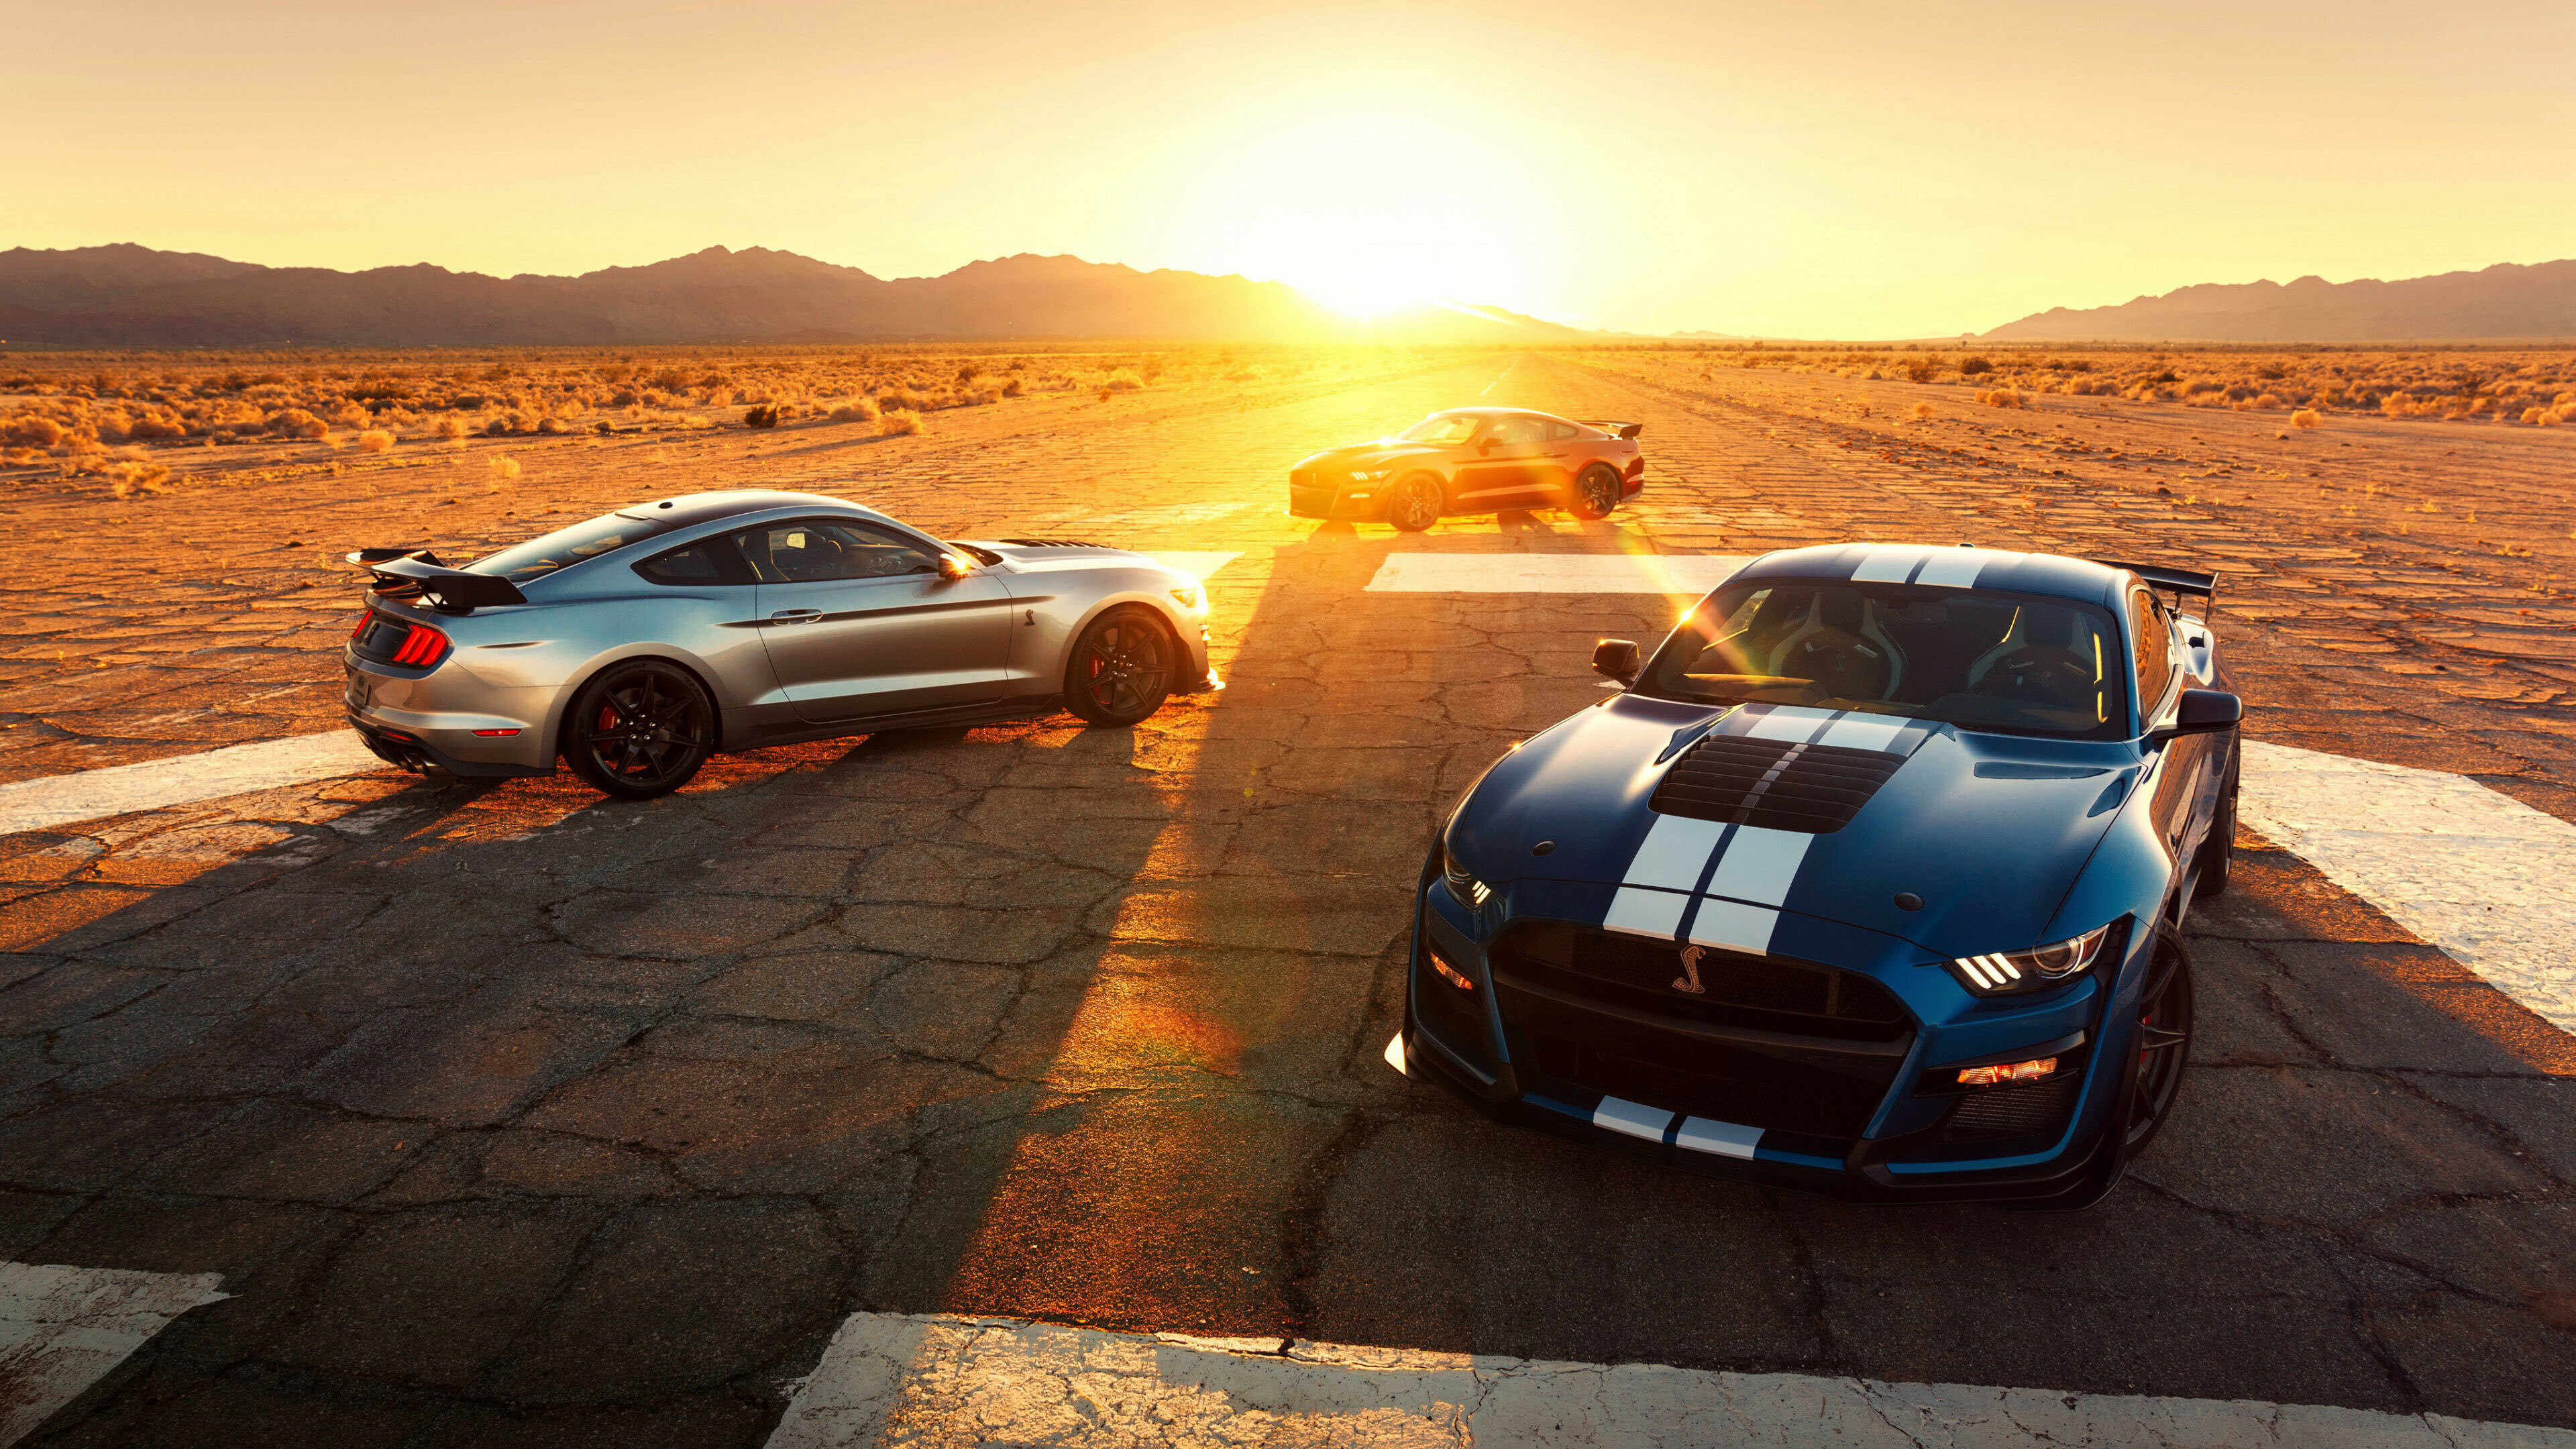 Ford: Mustang Shelby GT500, An ultra-high-performance car. 3840x2160 4K Wallpaper.